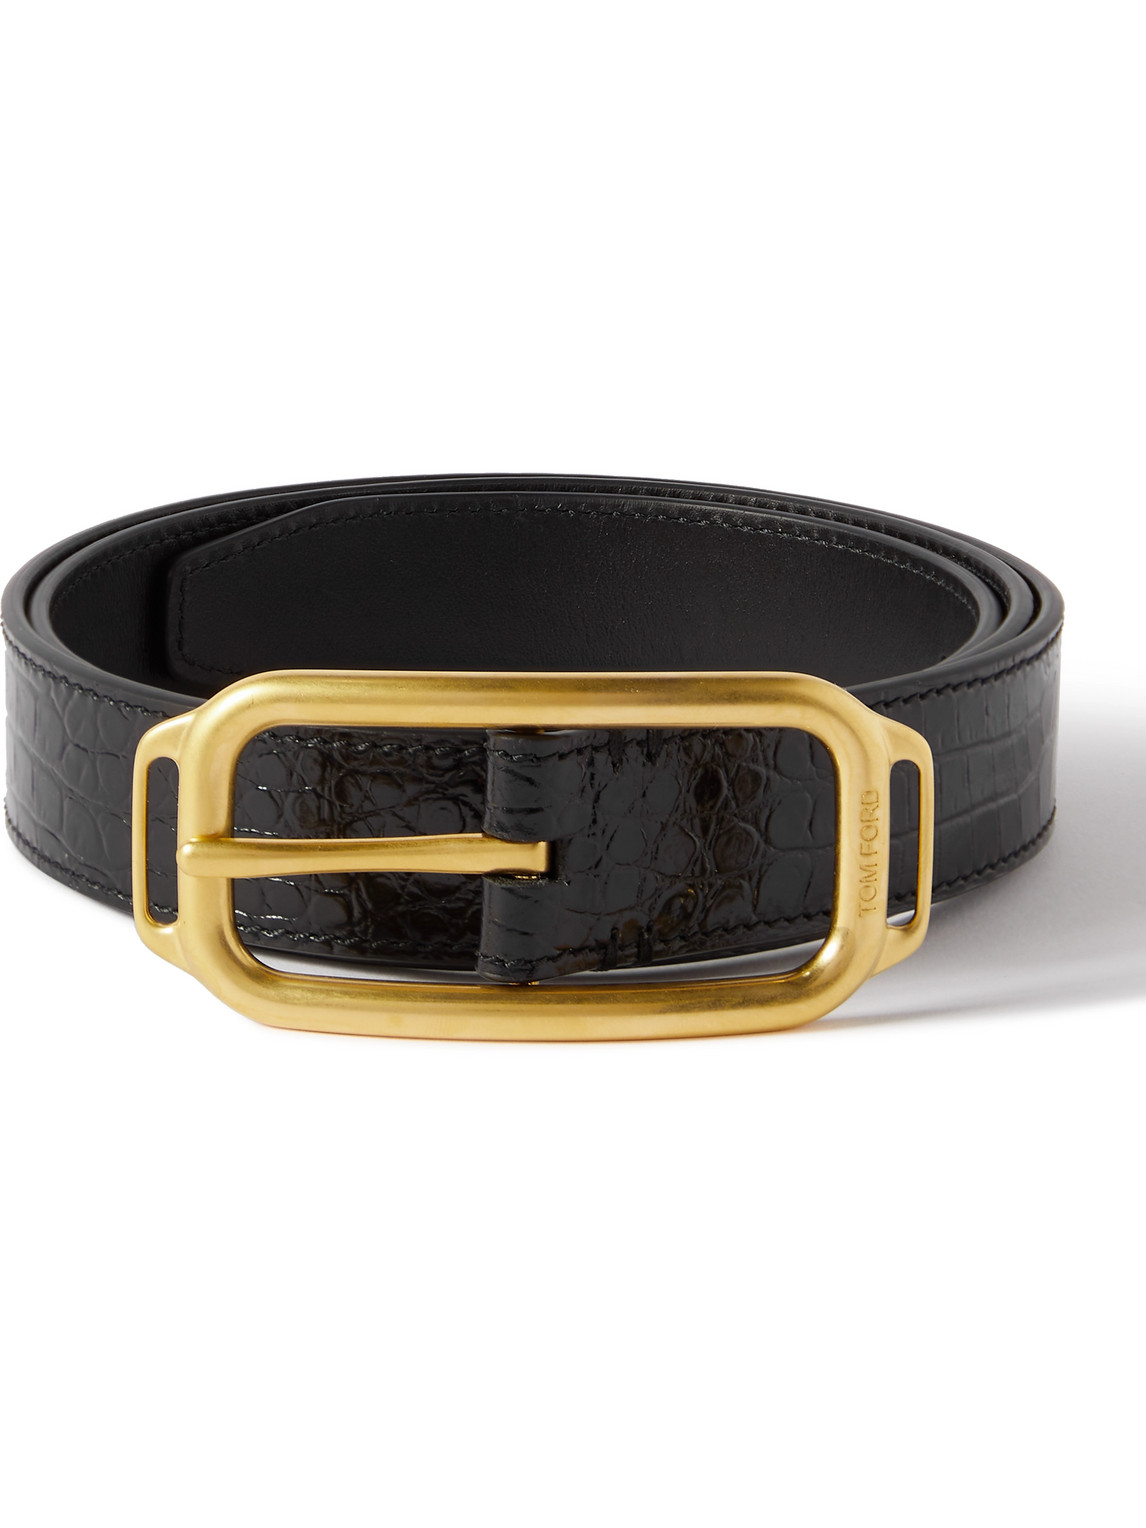 TOM FORD - 3cm Glossed Croc-Effect Leather Belt - Men - Black - EU 110 von TOM FORD